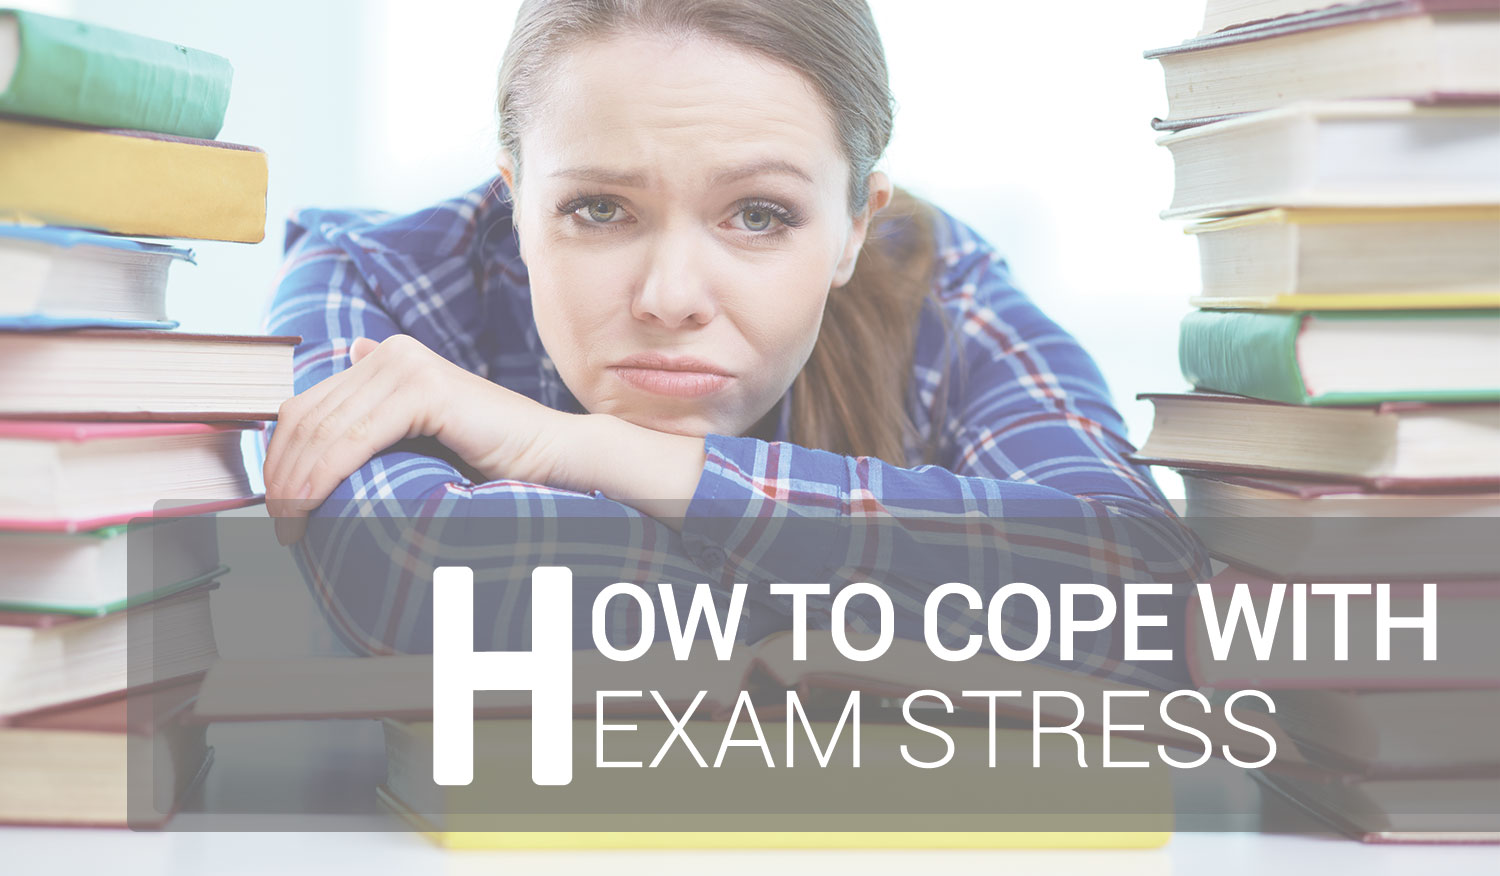 Exam stress. Cope with stress. Стресс у студентов. Экзамен стресс картинки.